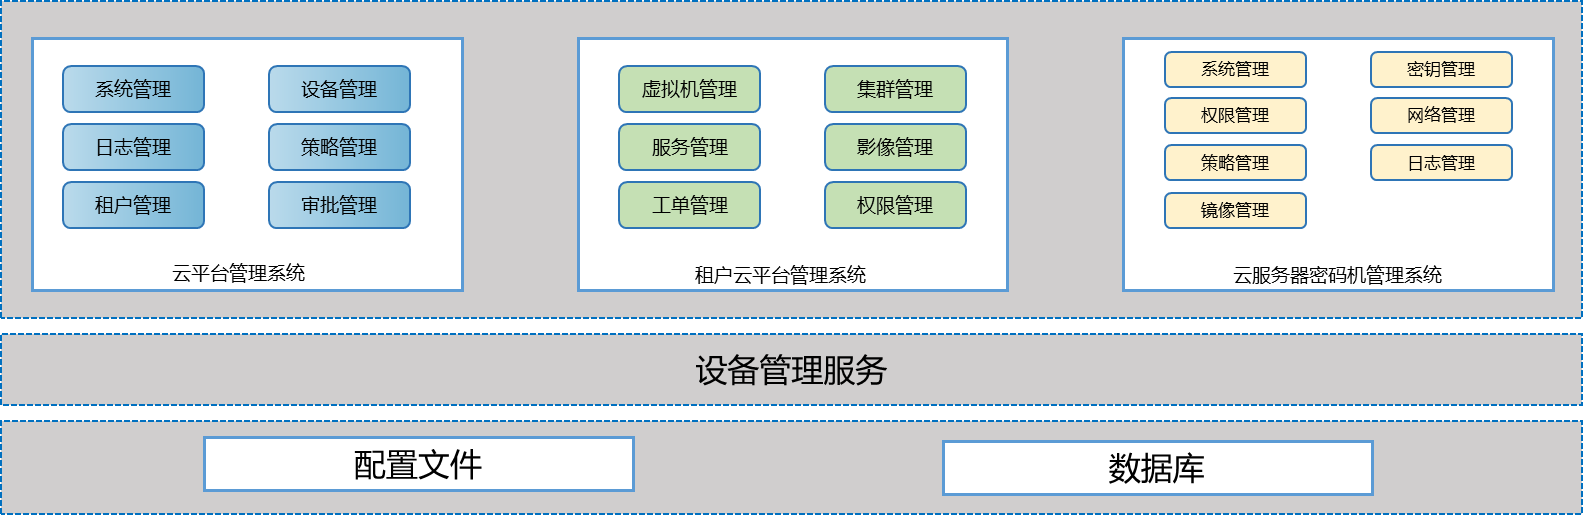 云服务密码机功能架构图.png